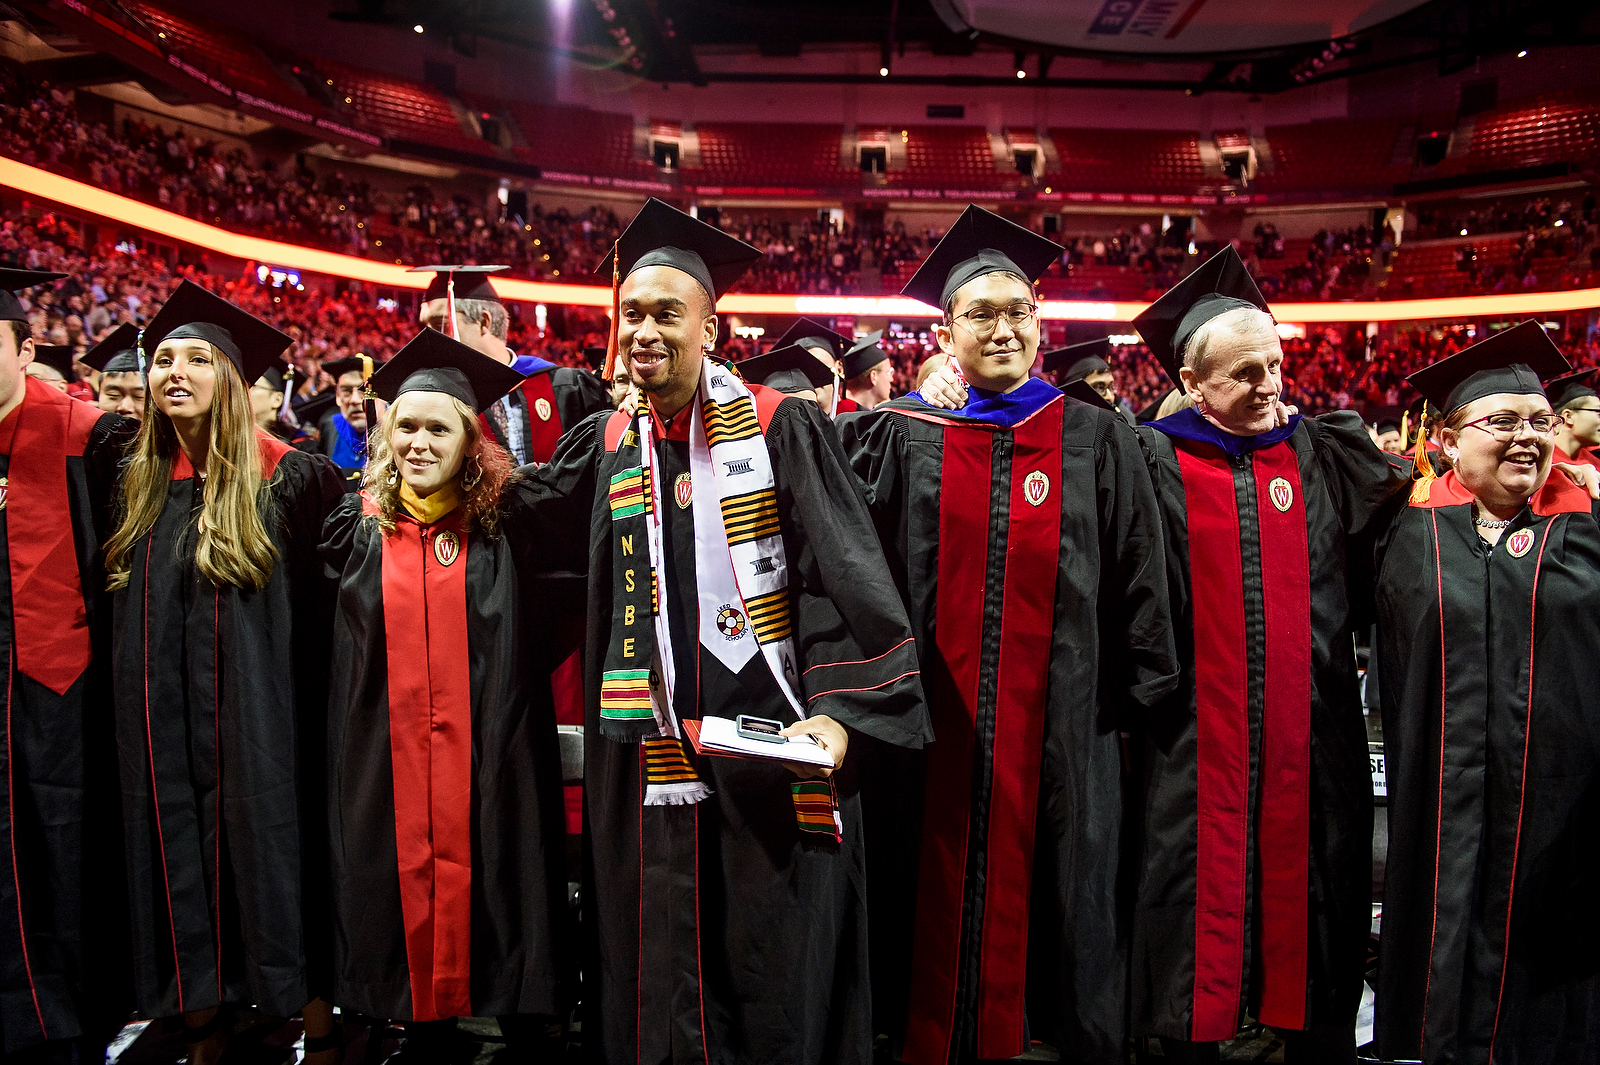 Photo of graduates arm in arm singing "Varsity."